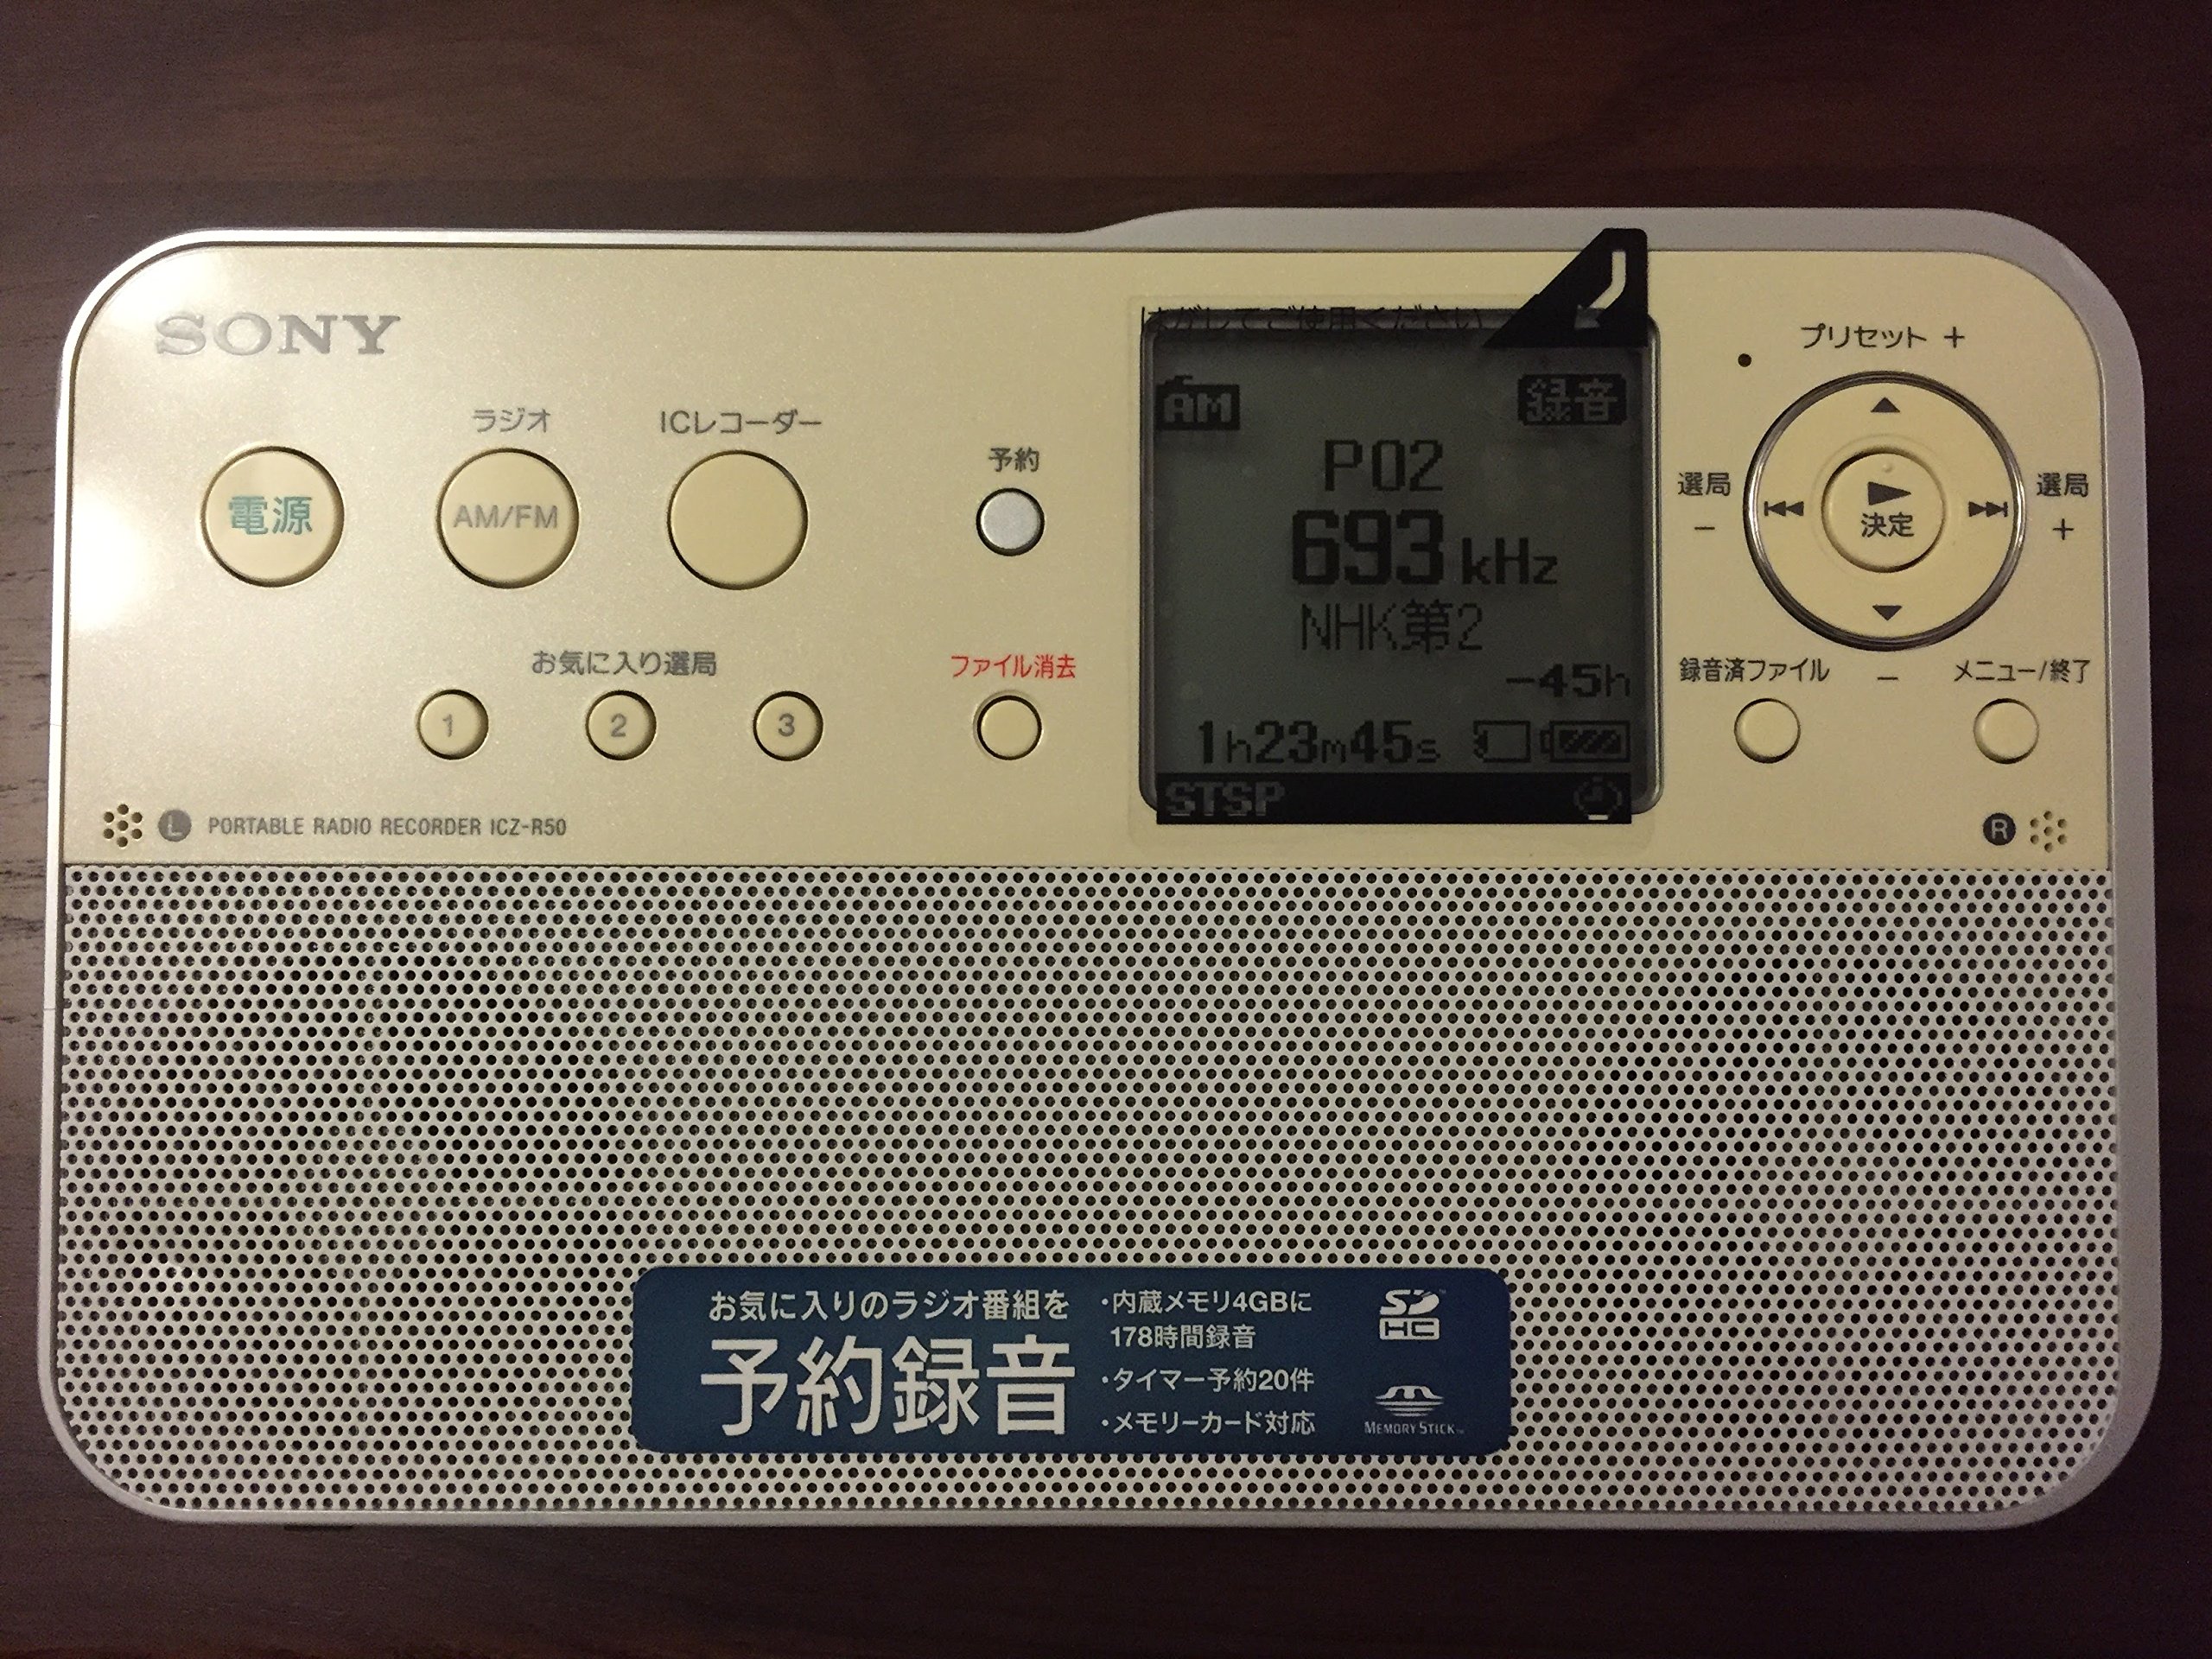 SONY портативный радио магнитофон R51 ICZ-R51